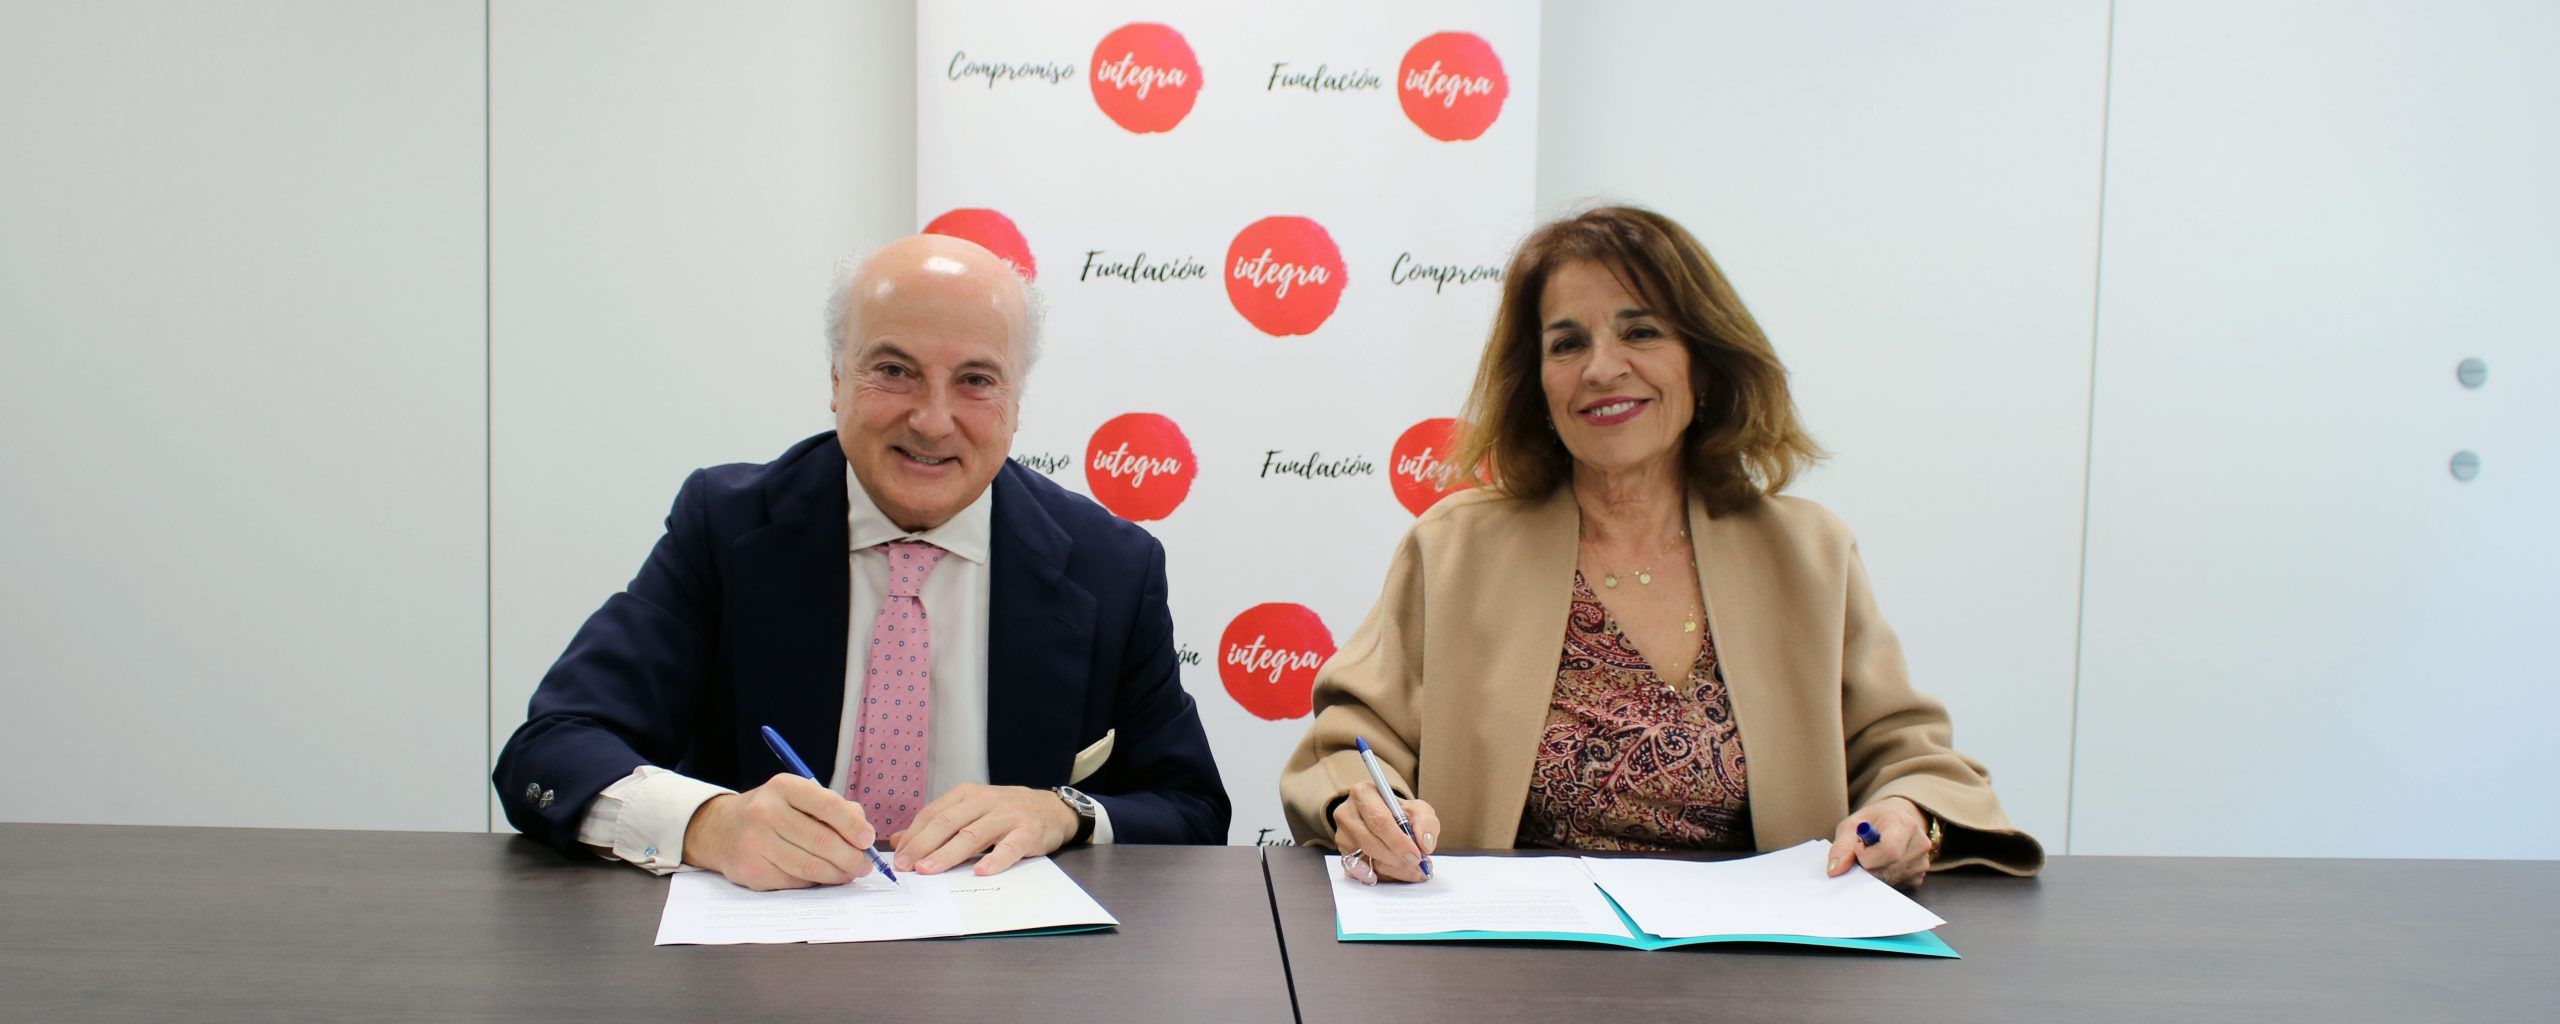 Pedro Tomey, Director General de Fundación AON España y Ana Botella, Presidenta Ejecutiva de Fundación Integra